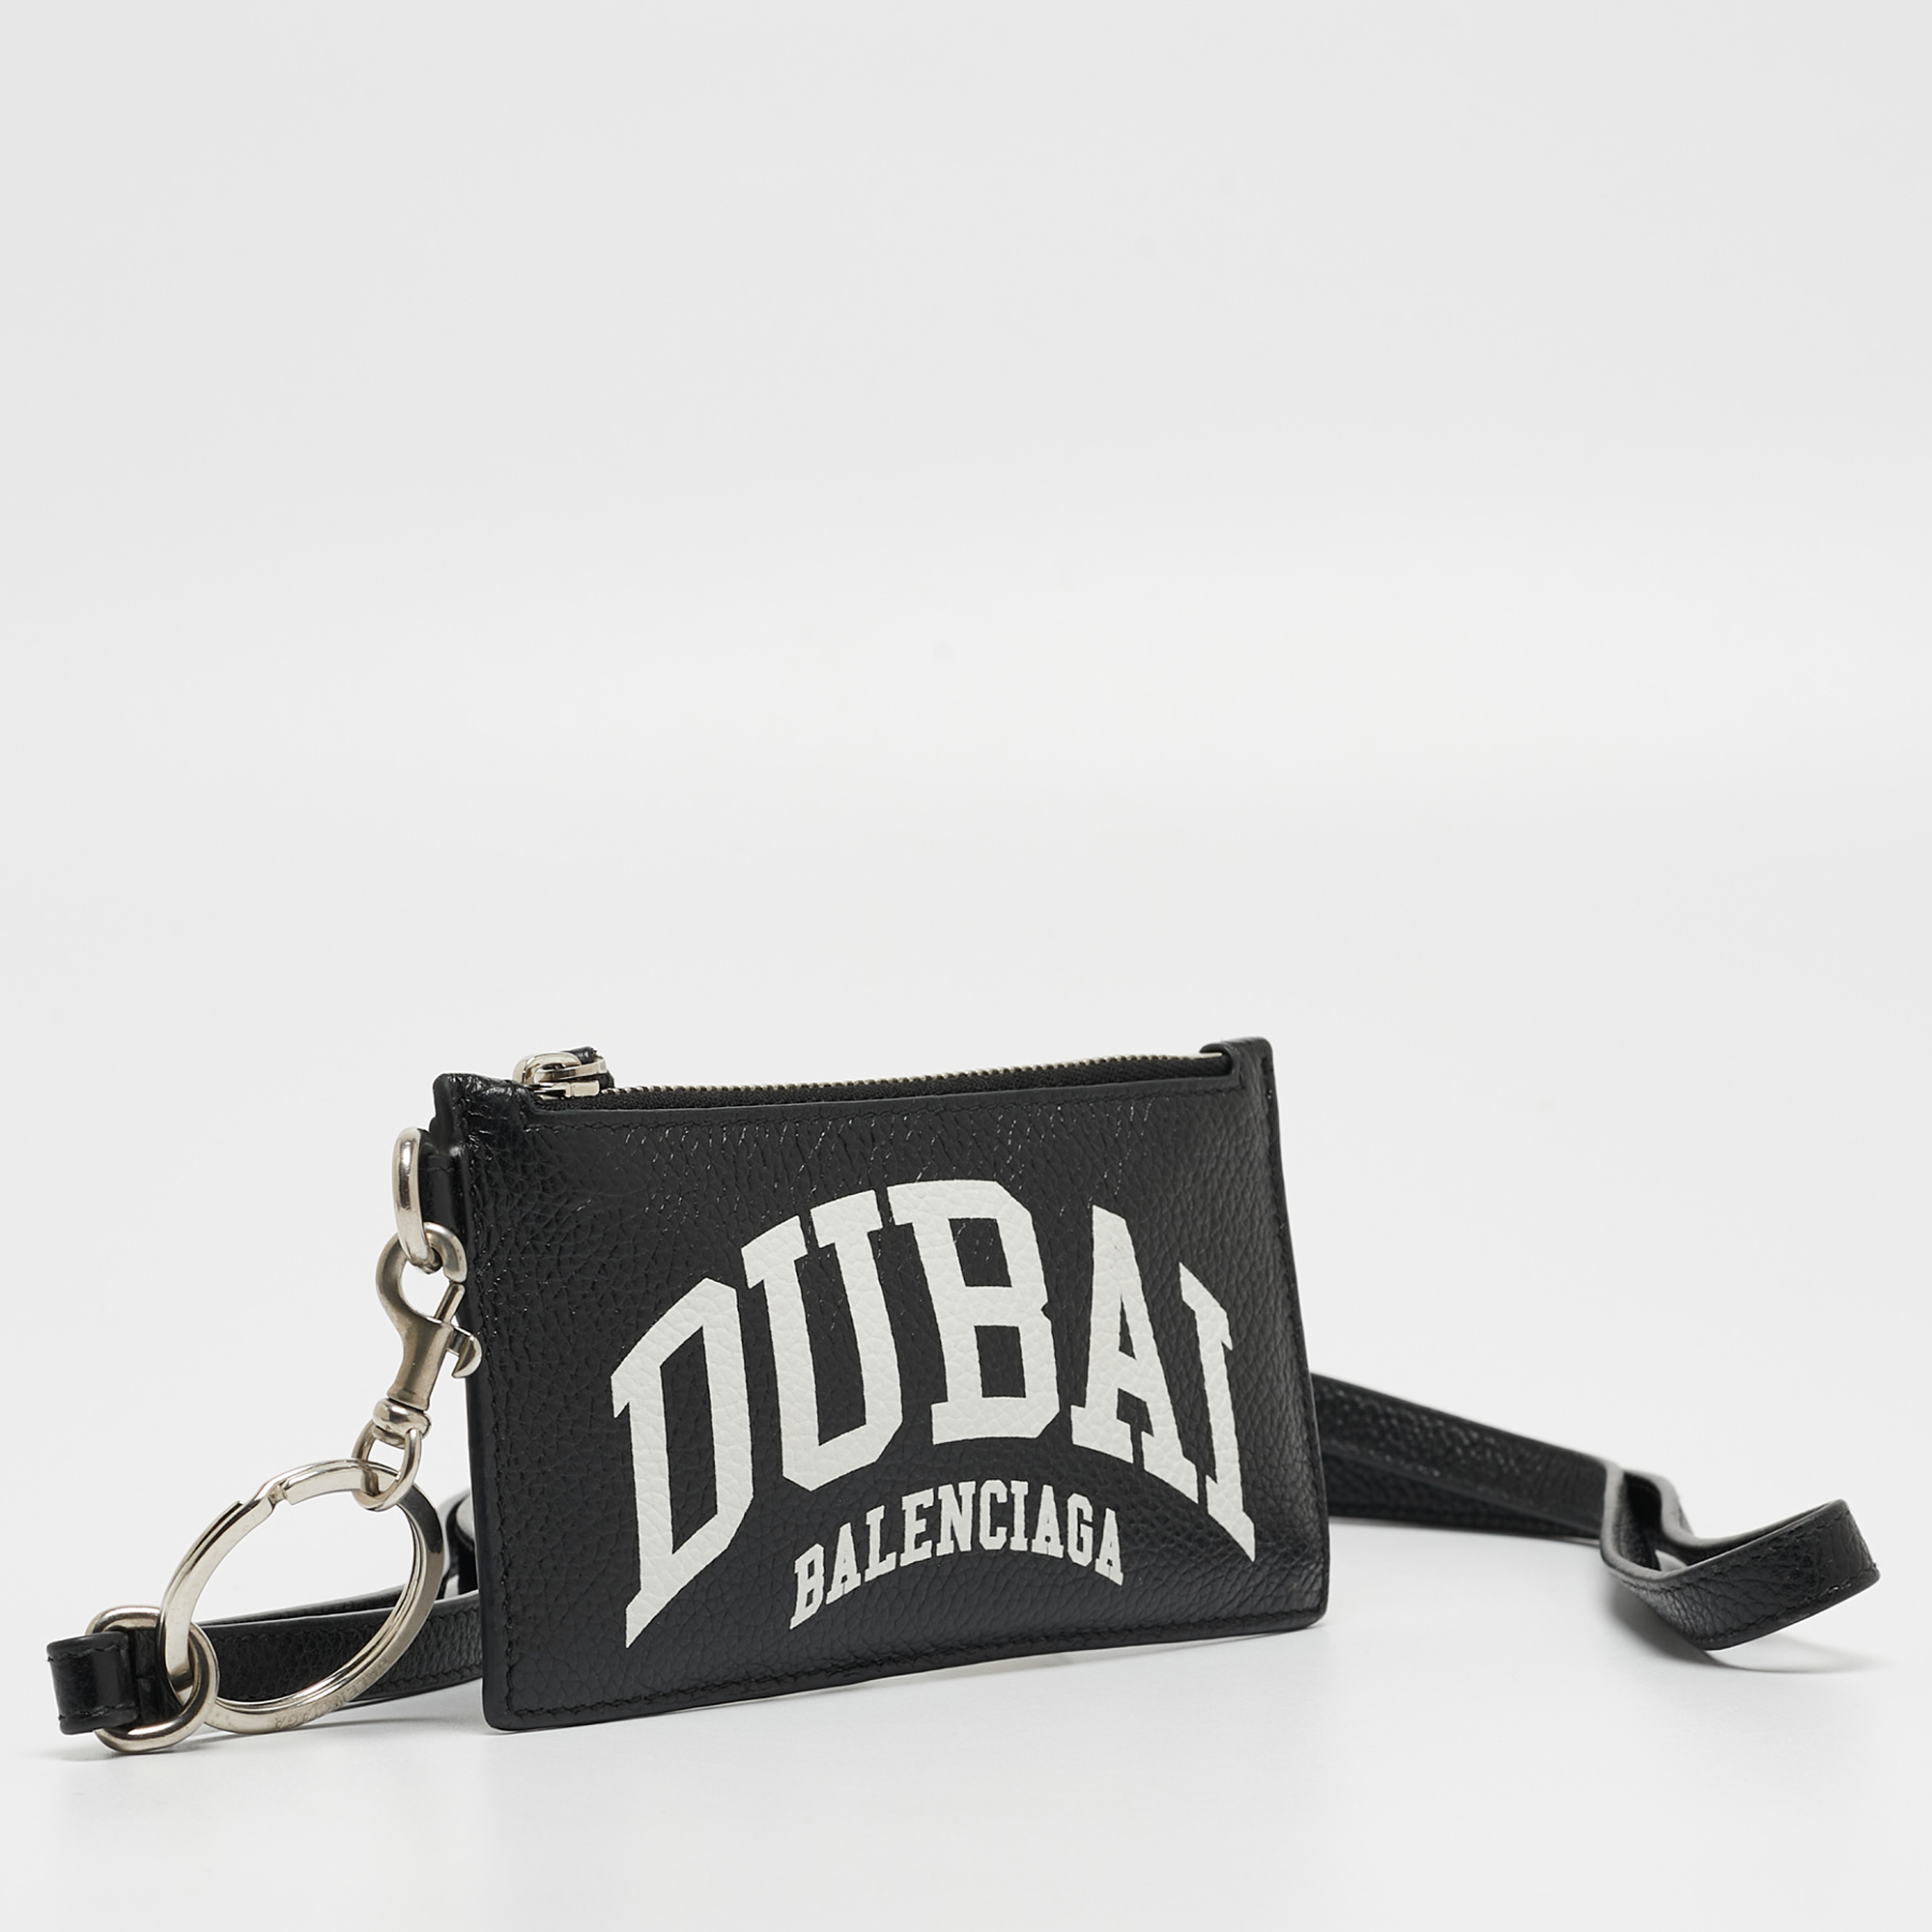 Balenciaga Black/White Leather Dubai Zip Card Holder With Strap